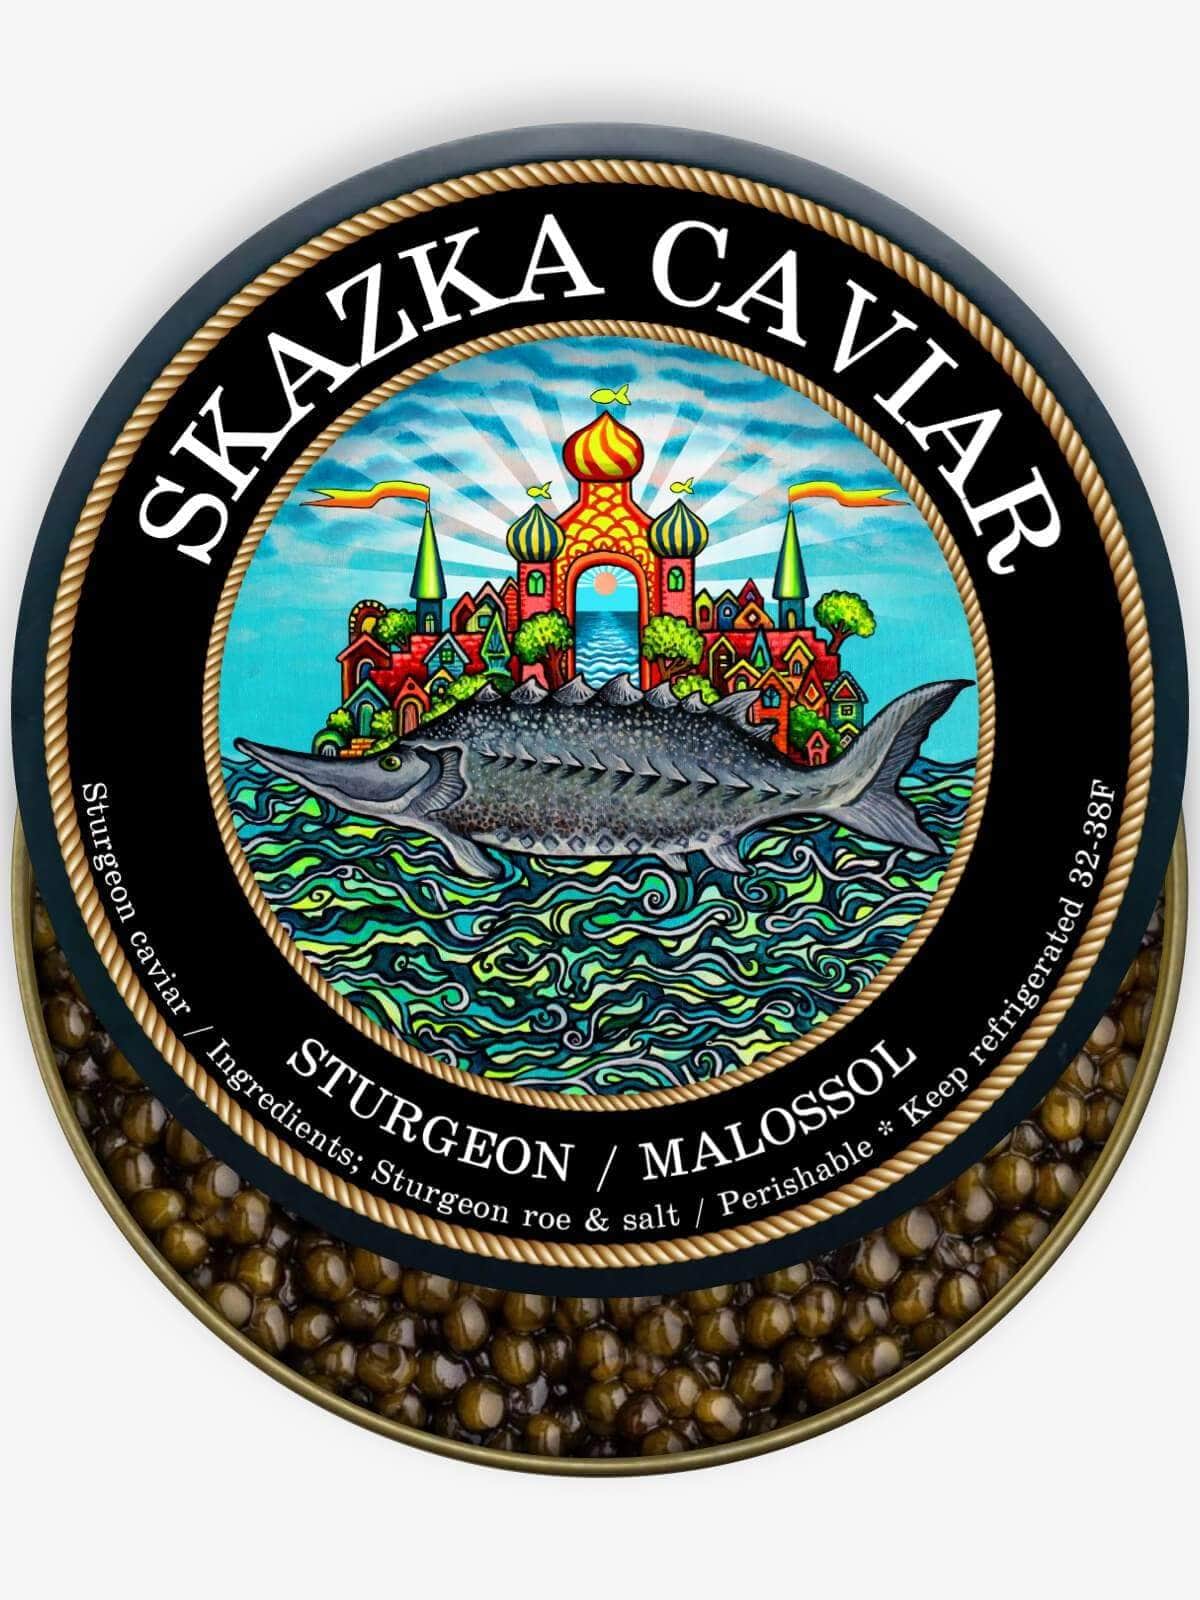 “River Beluga” Kaluga Sturgeon Caviar - Caviar Skazka